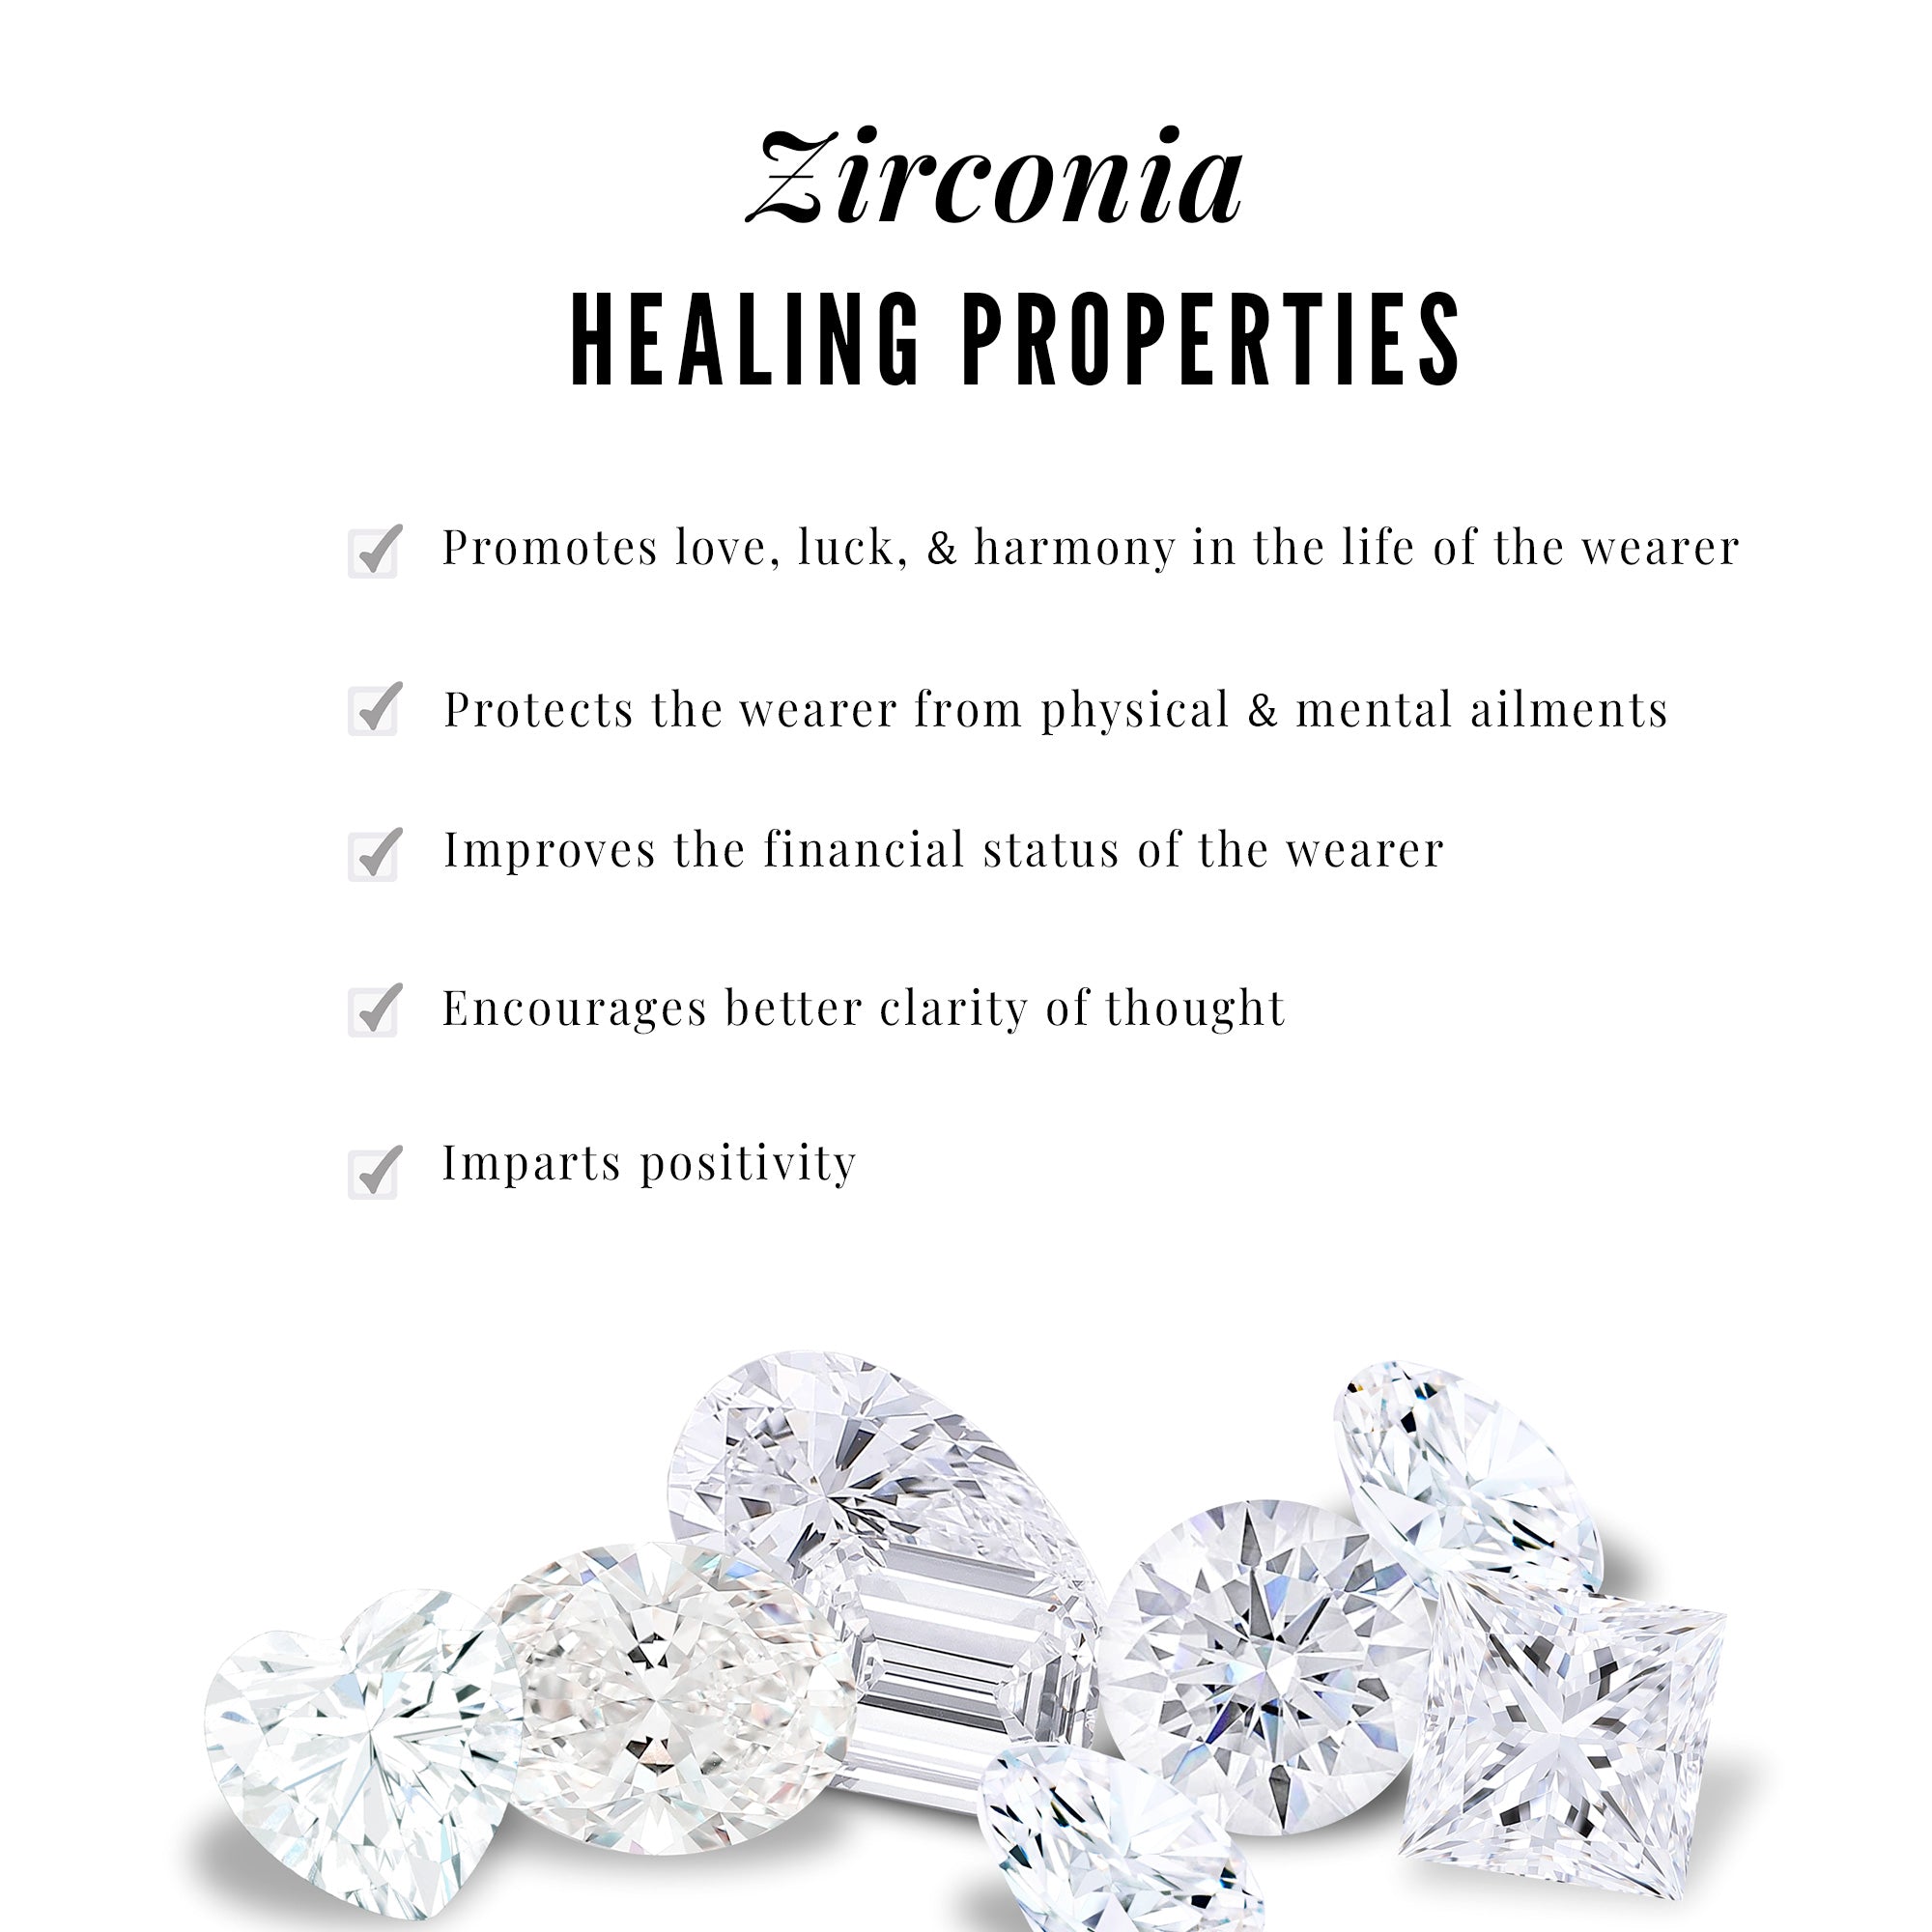 Cubic Zirconia Key Pendant Necklace Zircon - ( AAAA ) - Quality - Rosec Jewels